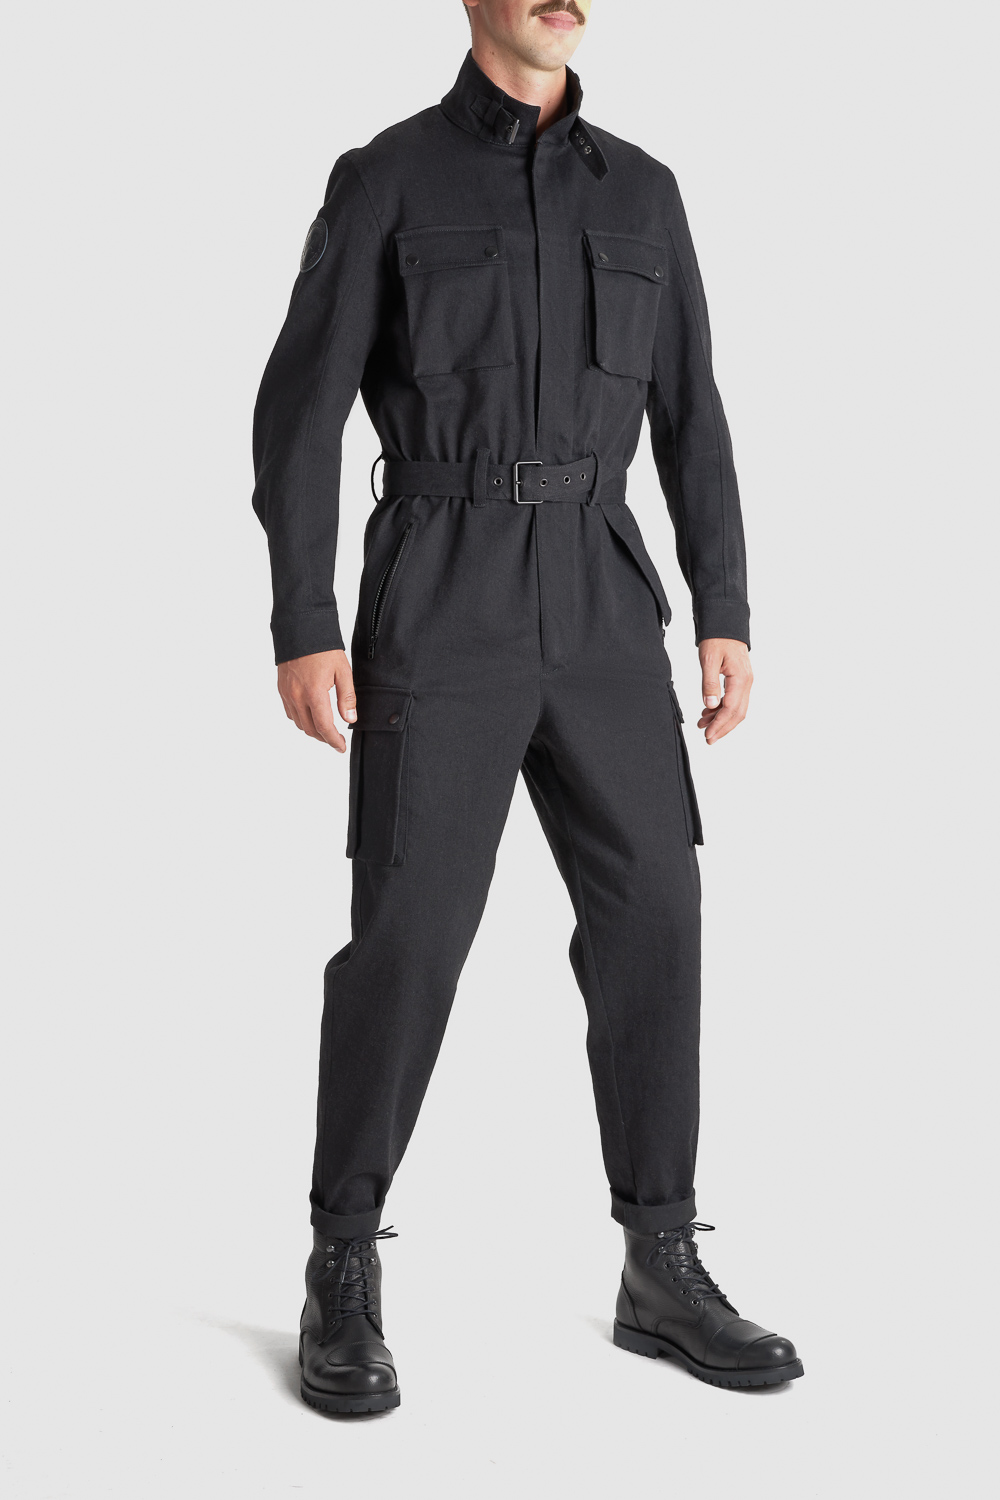 BRAT SUIT BLACK - One-Piece Overall Suit From Comfort-Stretch CORDURA® Denim 4